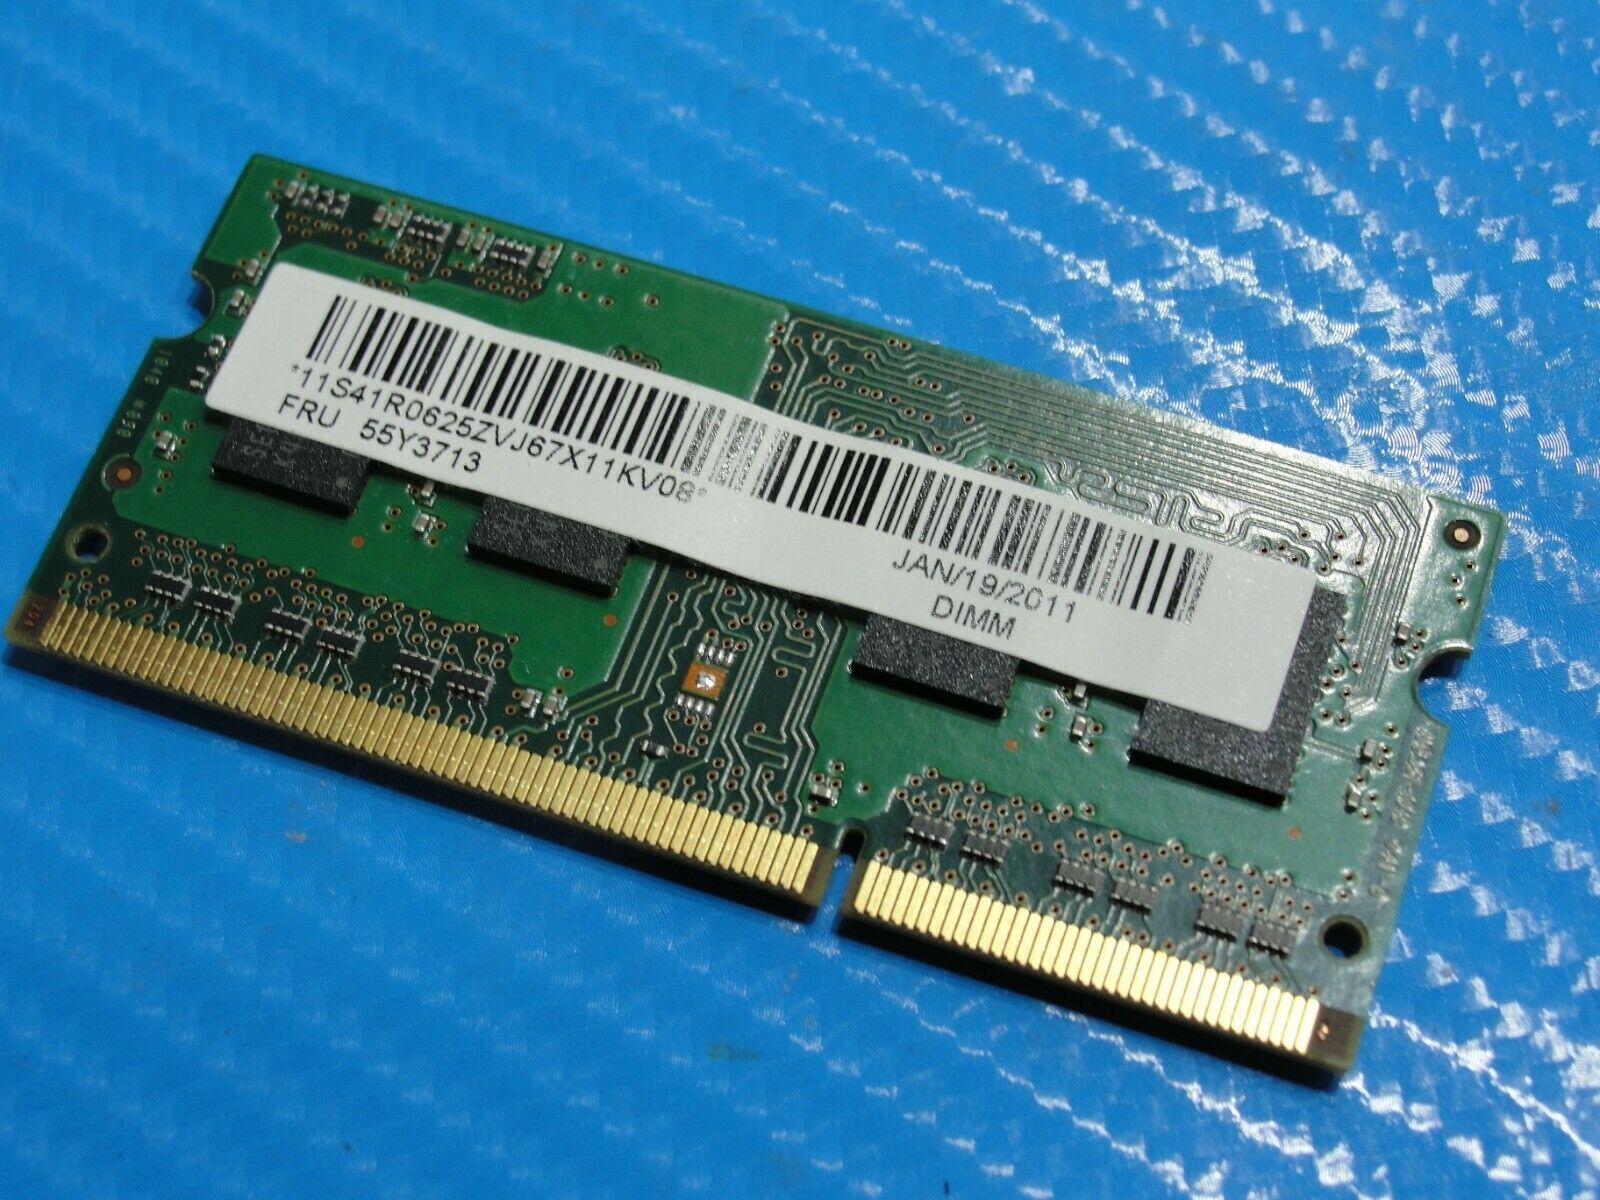 Lenovo 12.1 X201 Samsung SIDIMM RAM Memory 2GB M471B5773DH0-CH9 55Y3713 Samsung